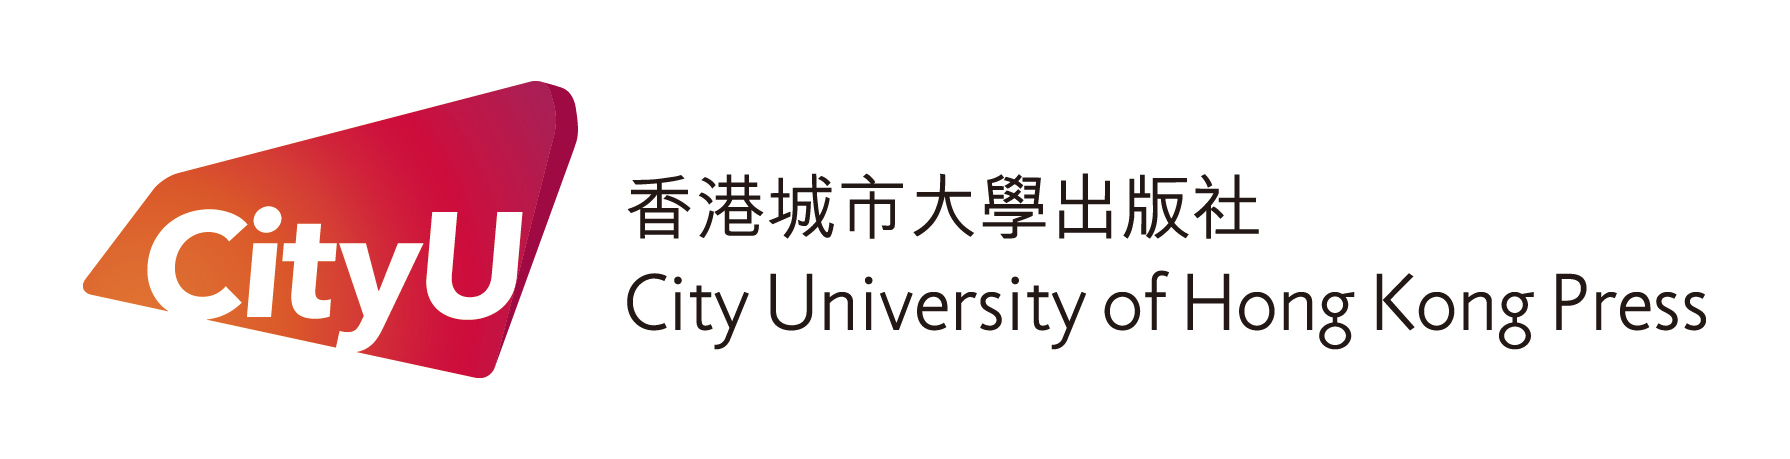 City University of Hong Kong Press • 香港城市大學出版社